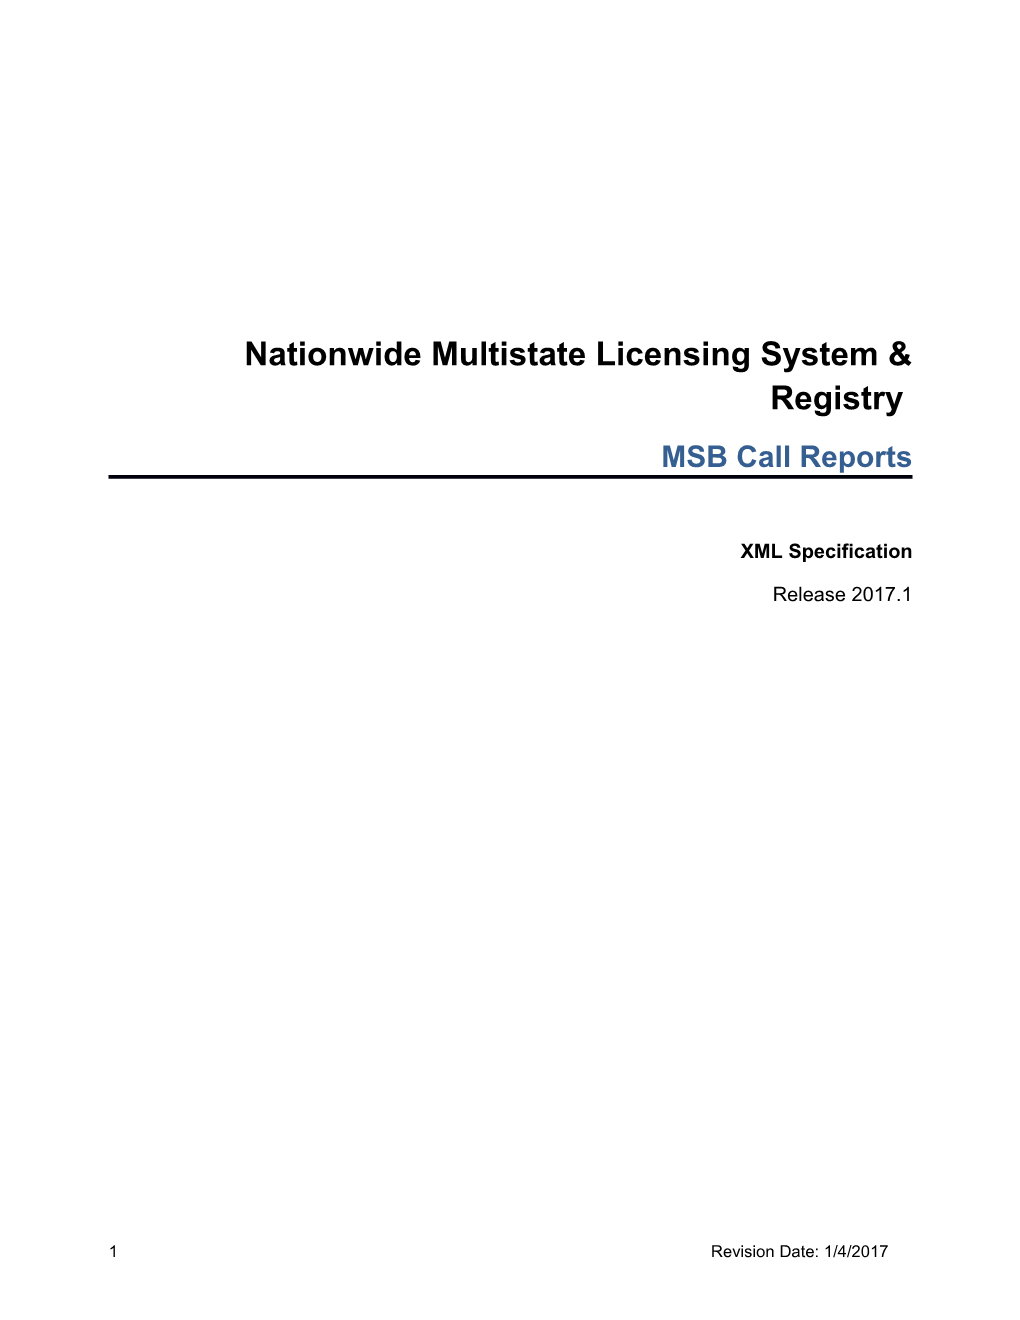 Nationwide Multistate Licensing System & Registry